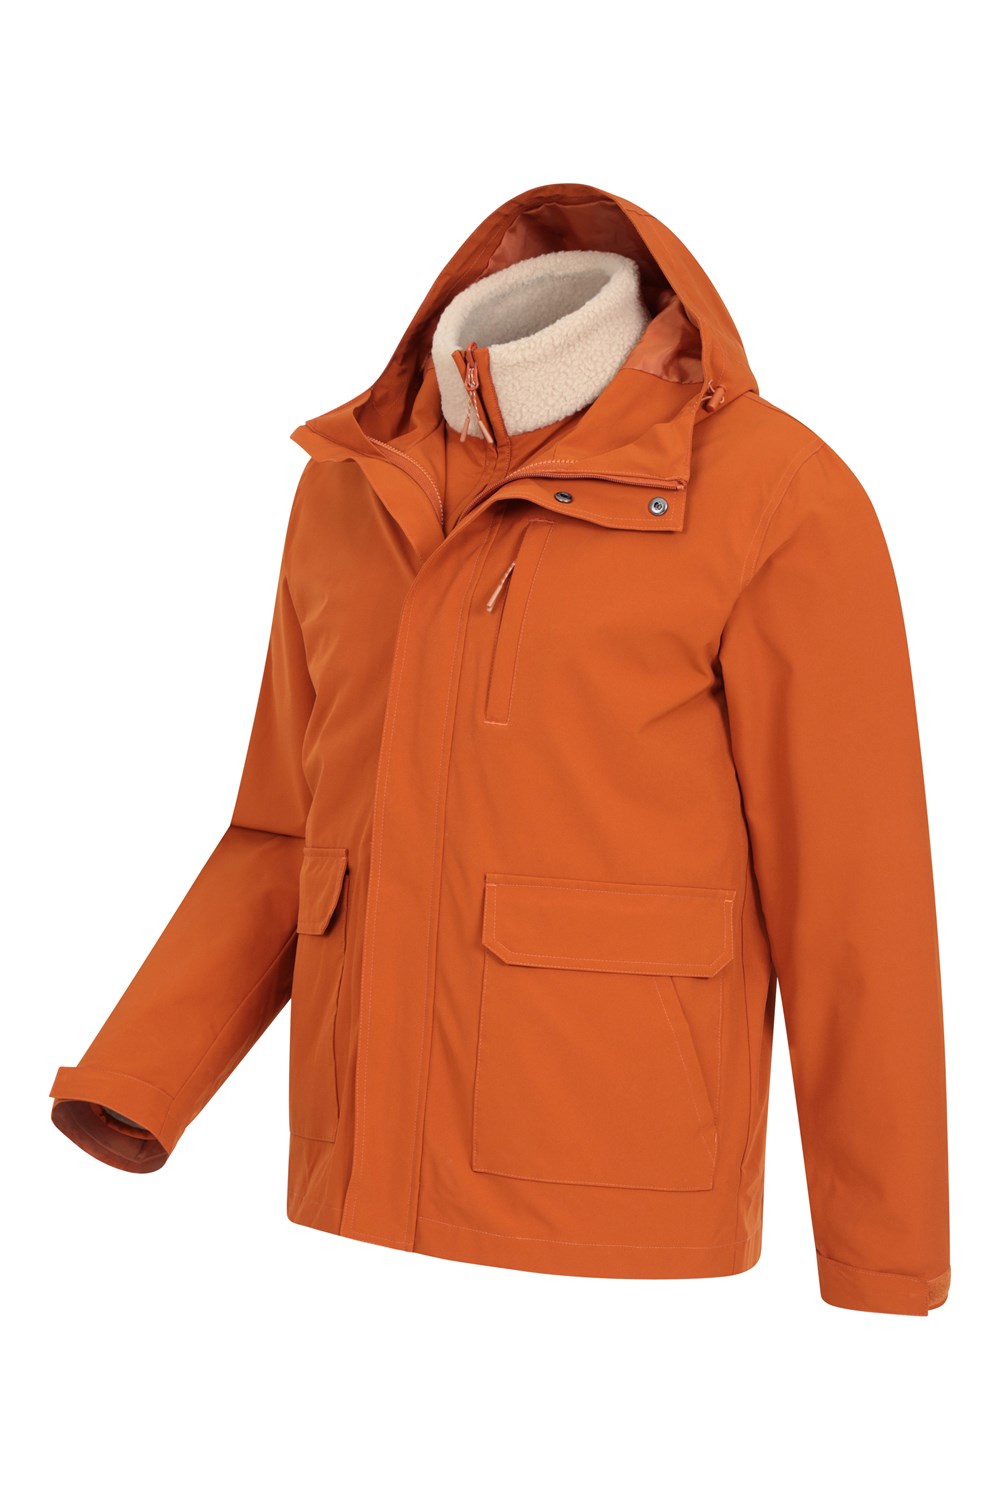 Mountain Warehouse Headland Mens 3 in 1 Jacket Waterproof Breathable